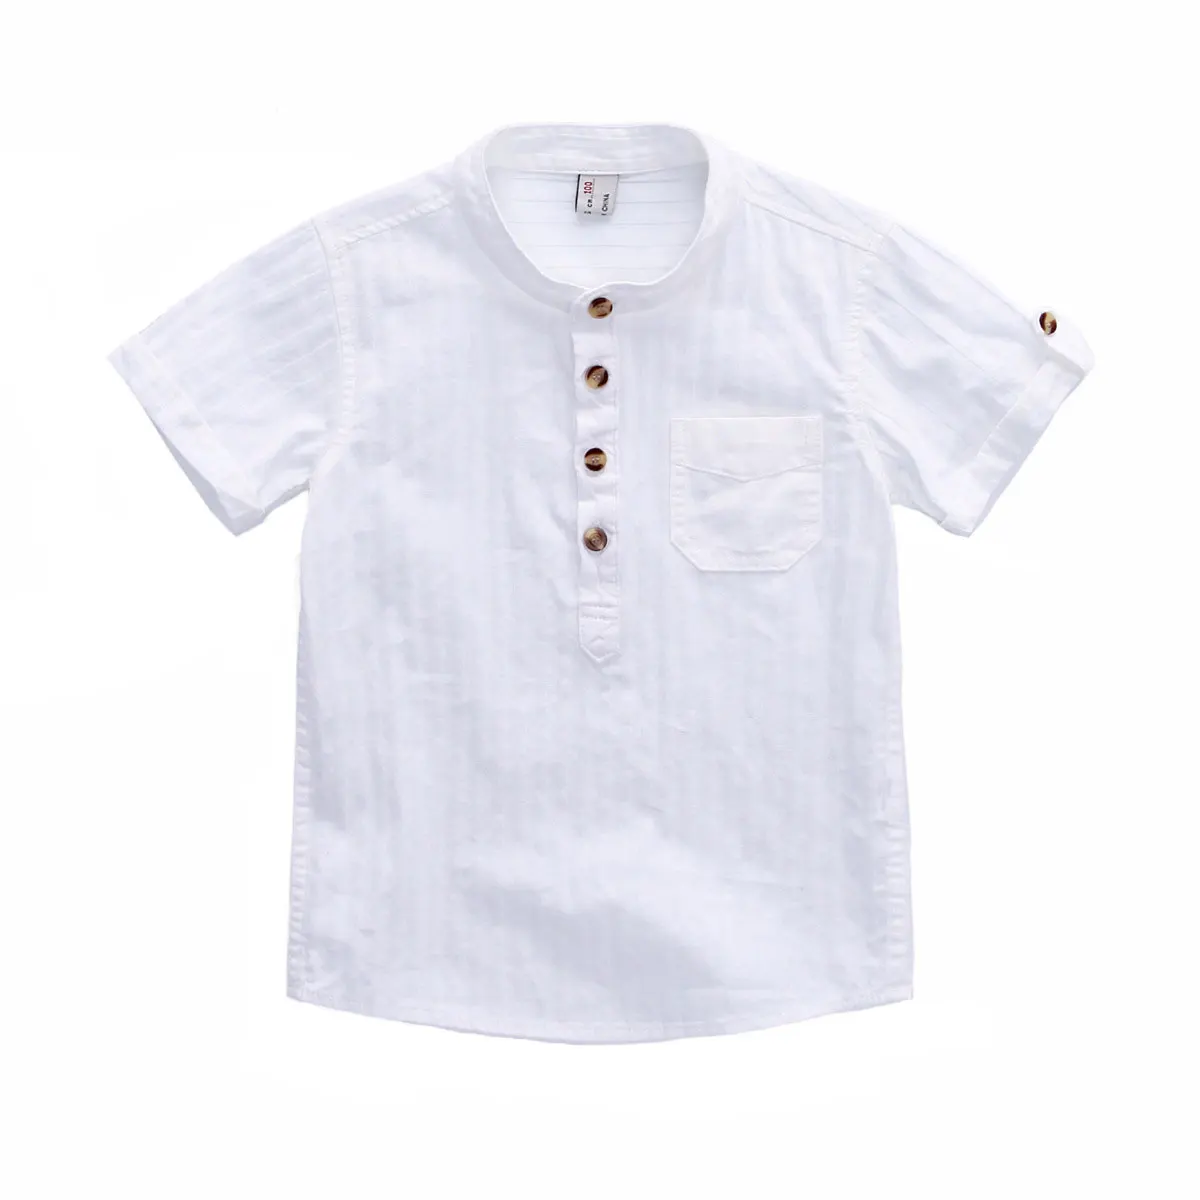 Spring Summer Children Baby Toddler Boy Cotton Short Sleeve White Tee Shirts Baby Stripe Blouse Kid Korean Top Shirts